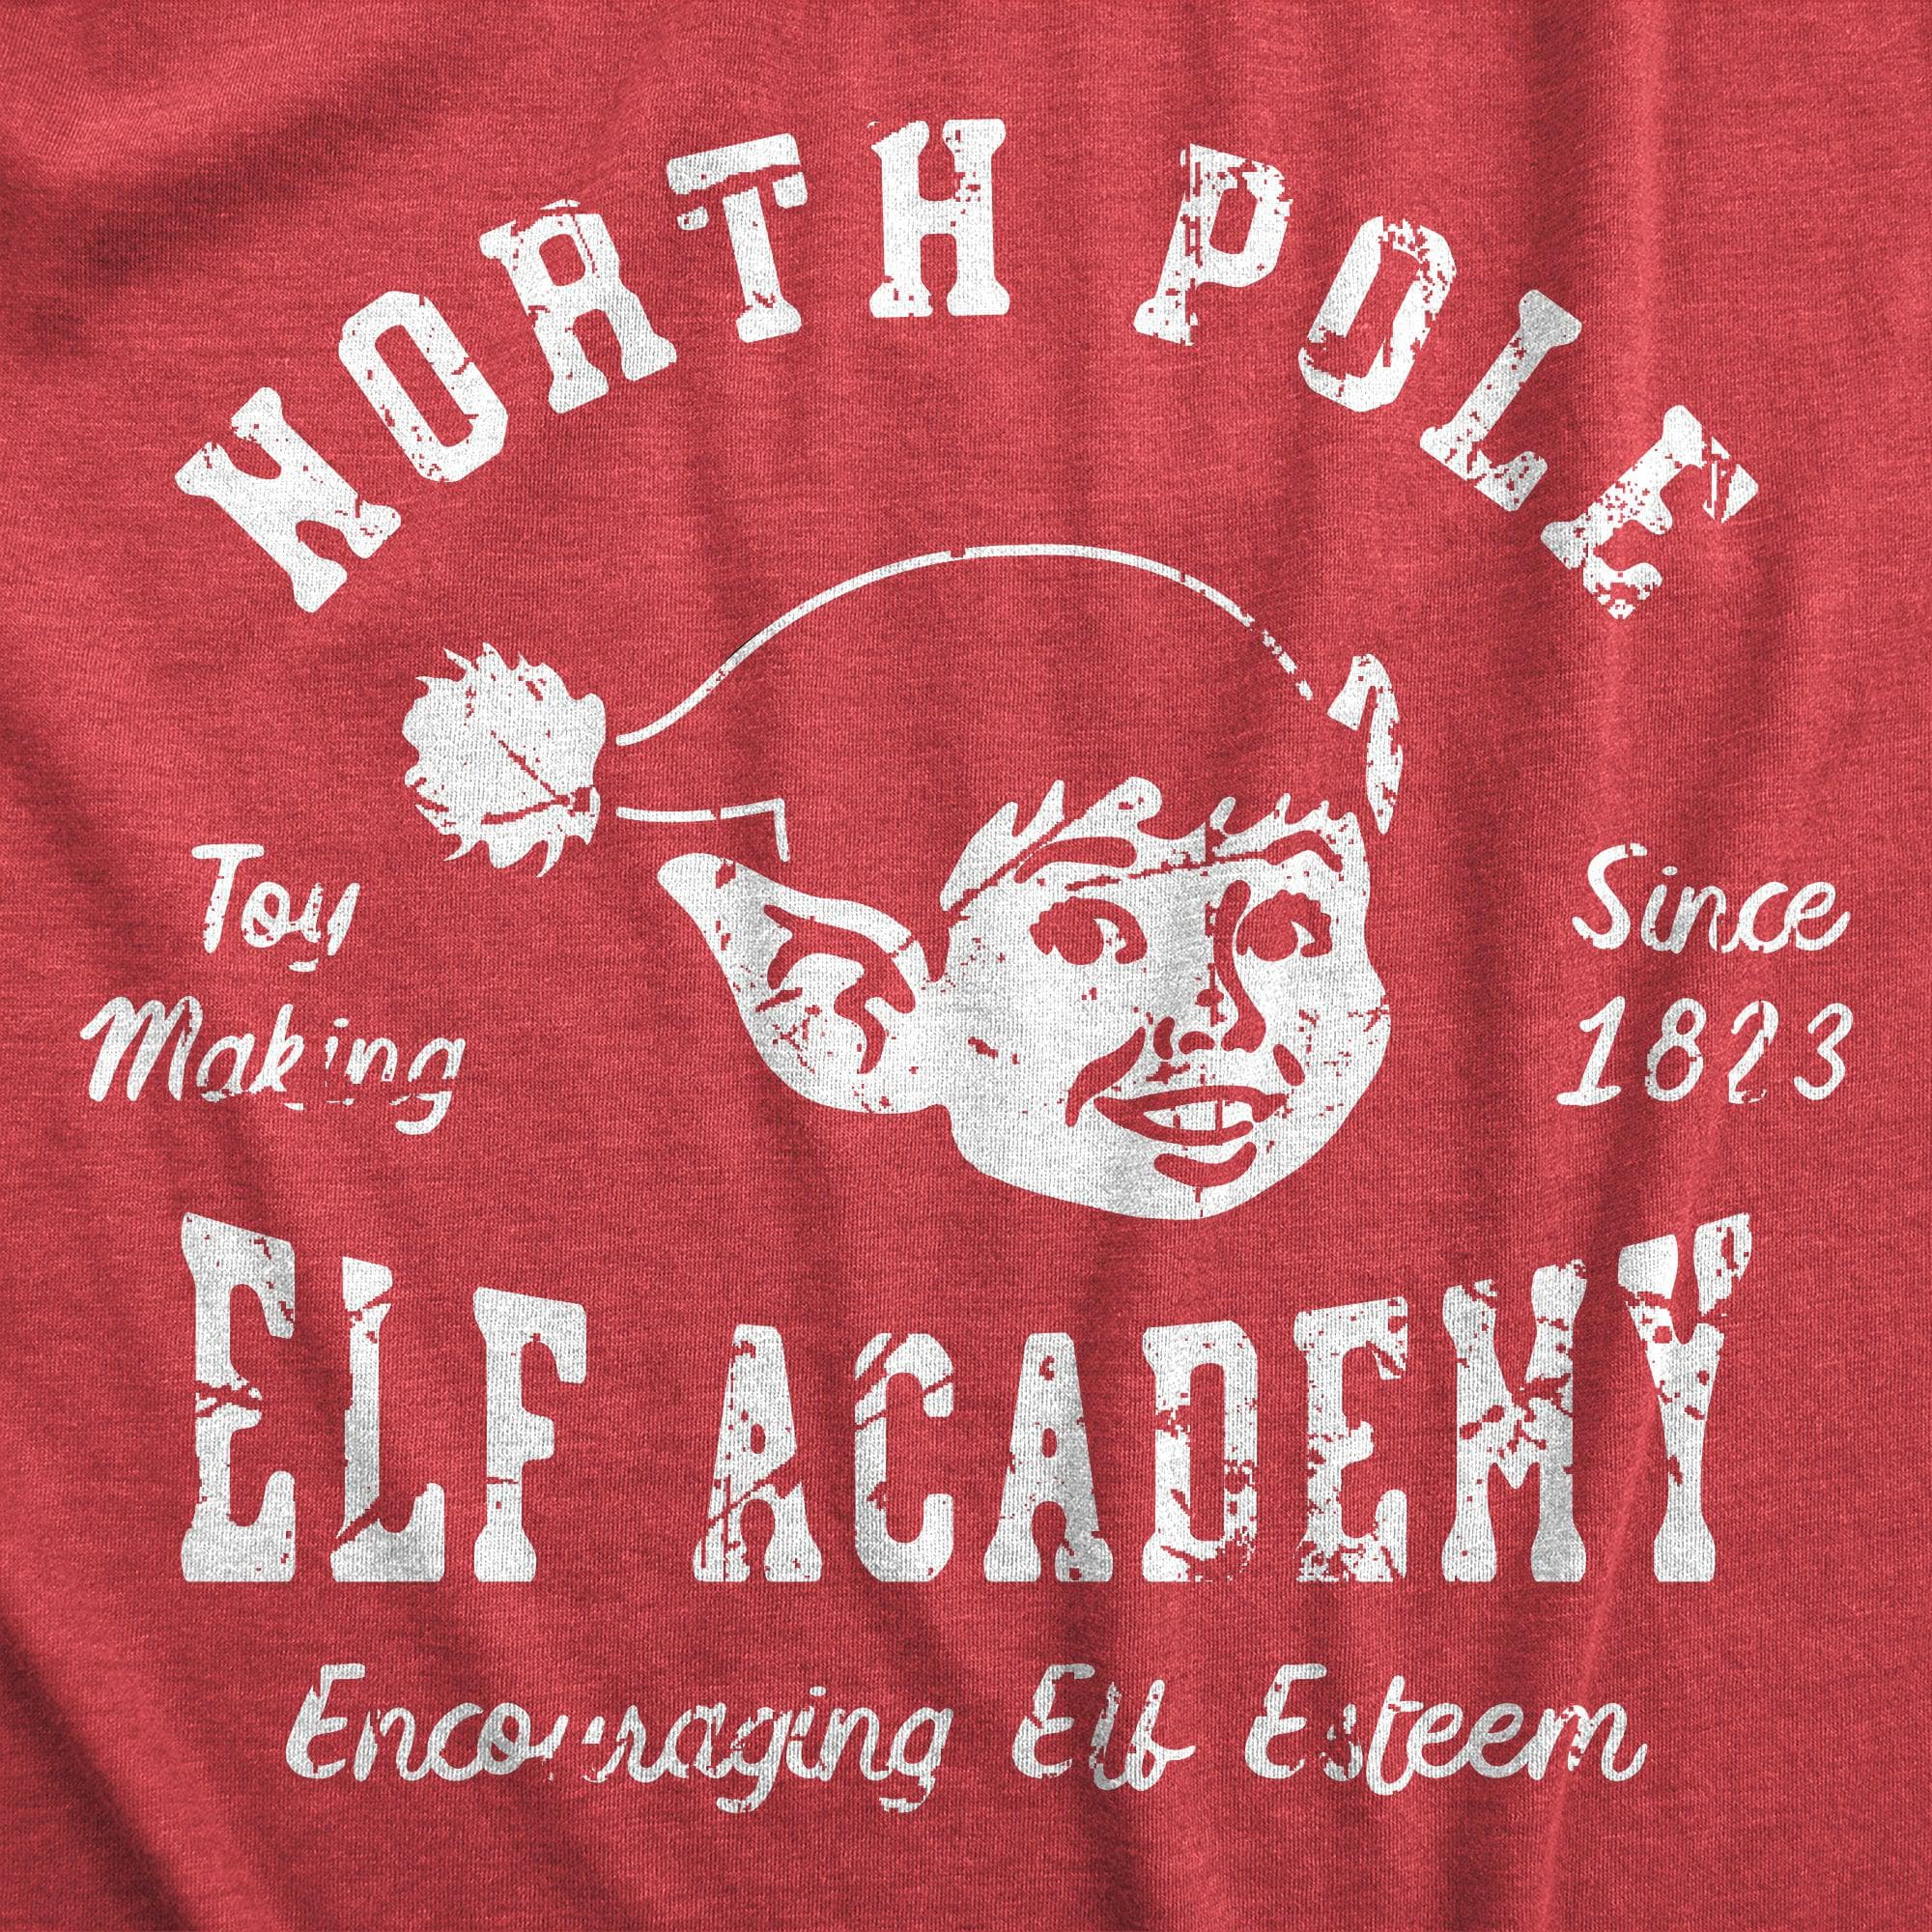 North Pole Elf Academy Women's Tshirt  -  Crazy Dog T-Shirts